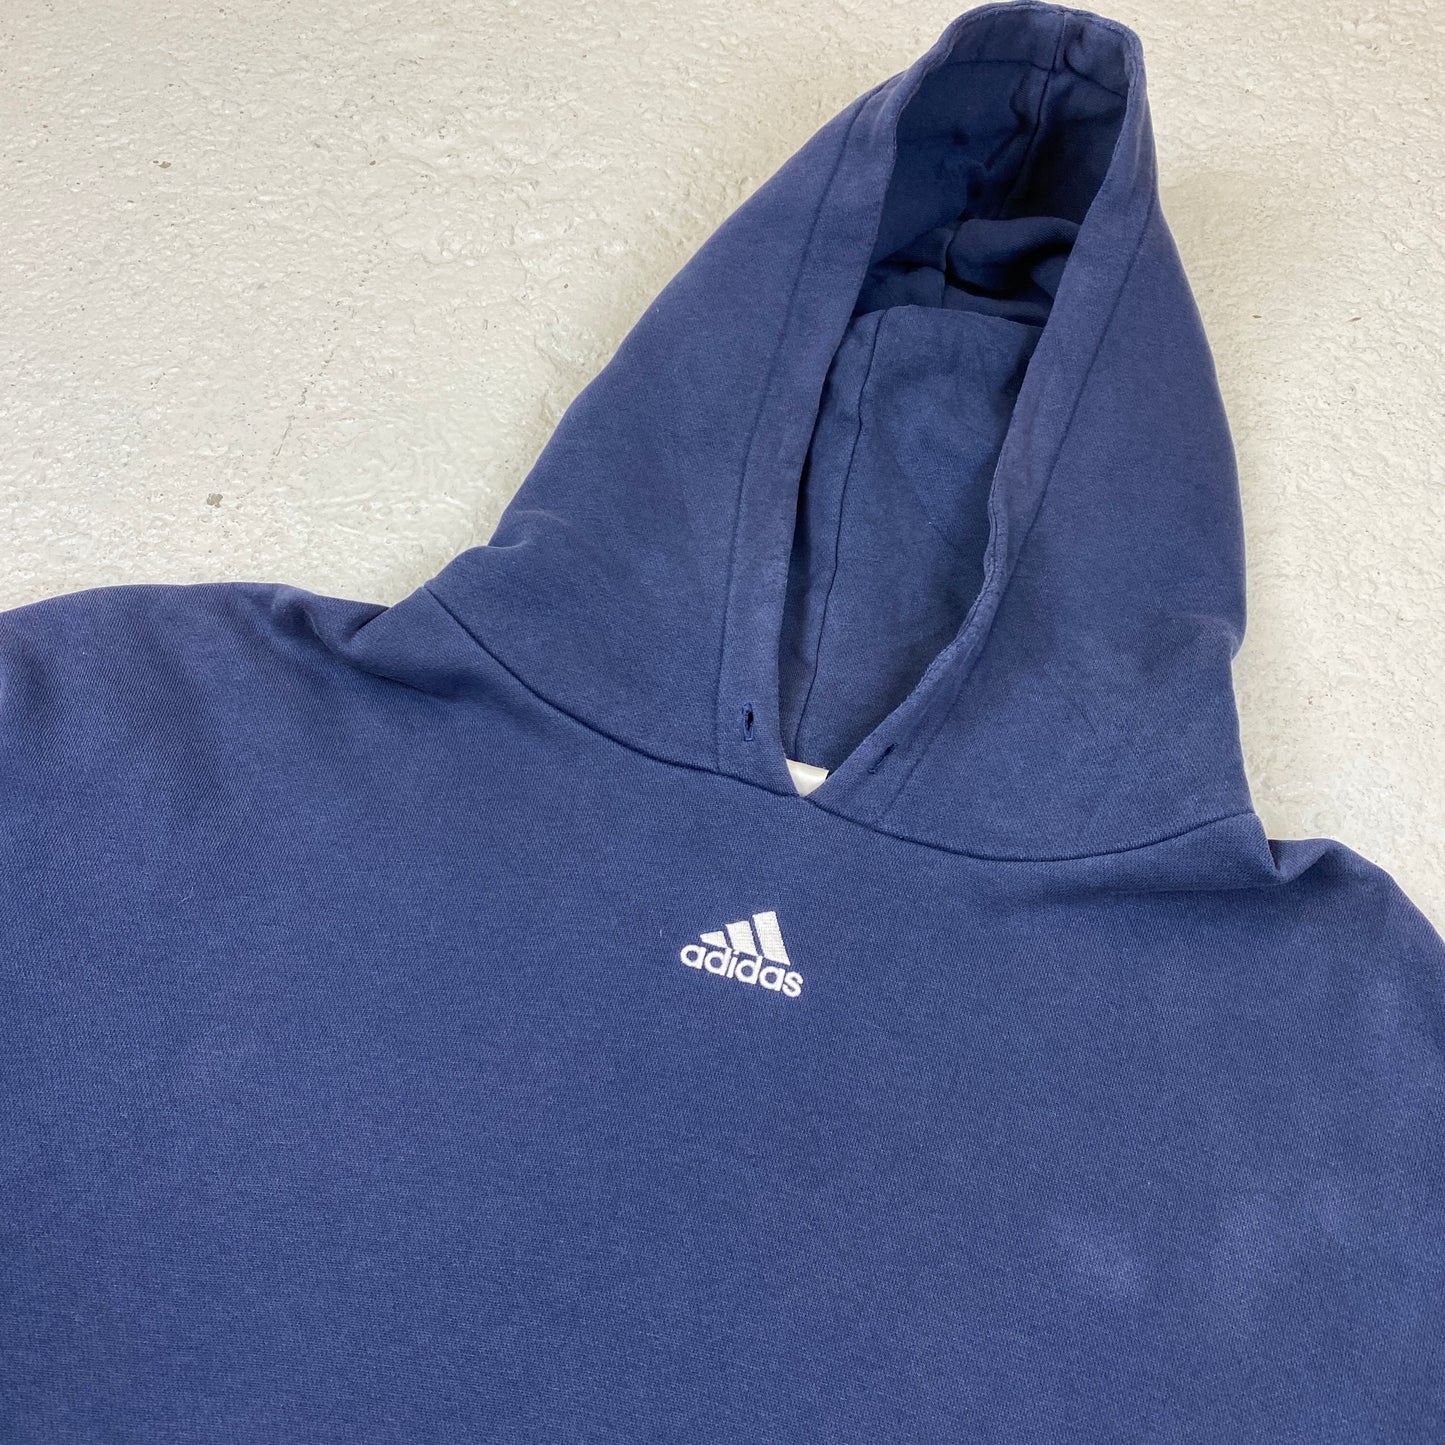 Adidas RARE heavyweight embroidered center logo hoodie (XXL)